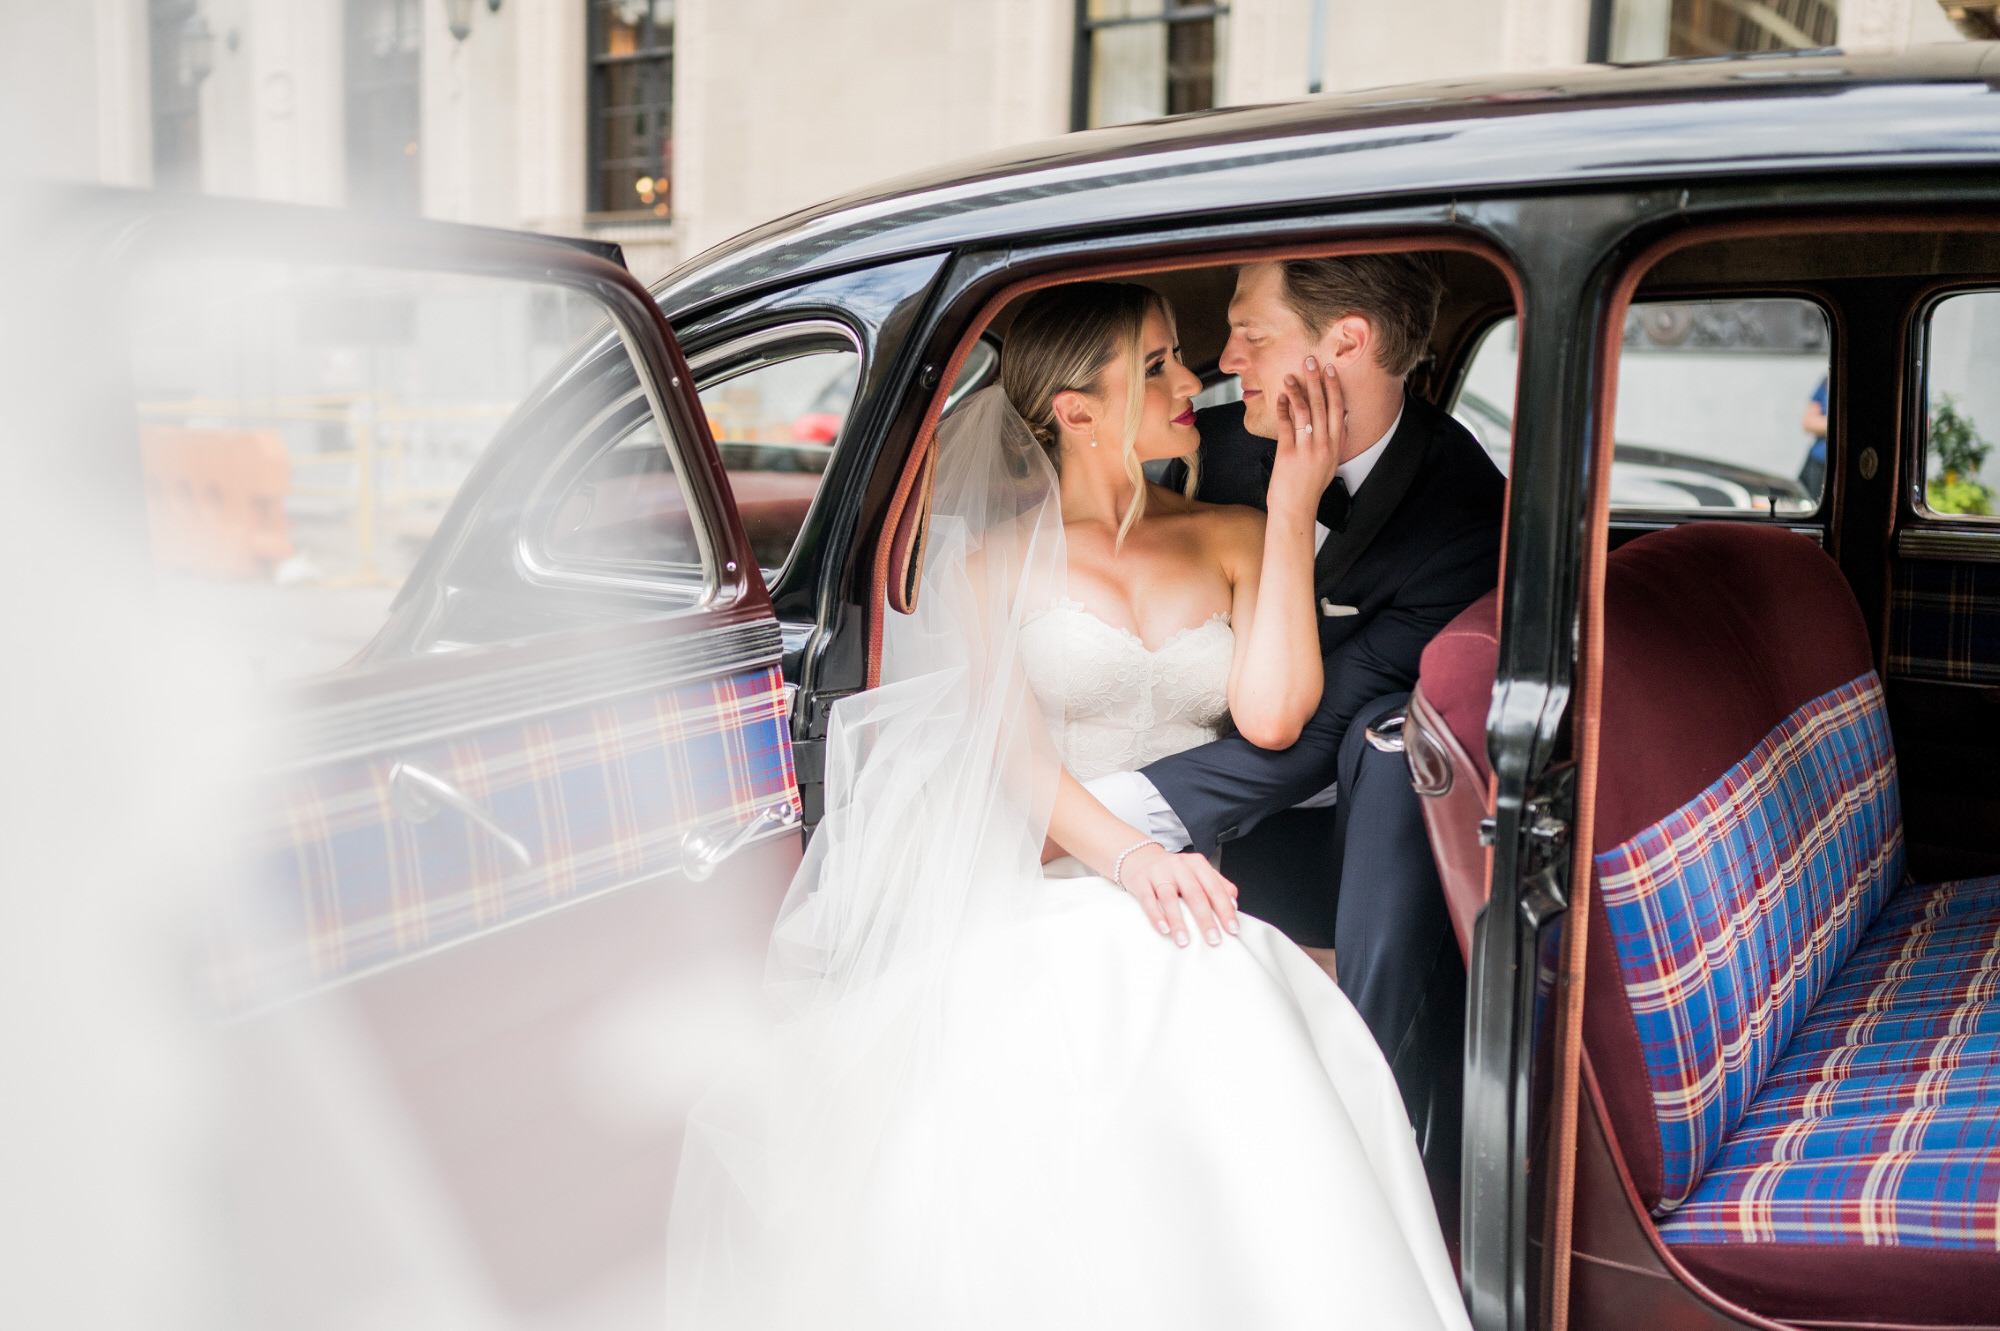 classic car wedding photo pittsburgh • Portfolio